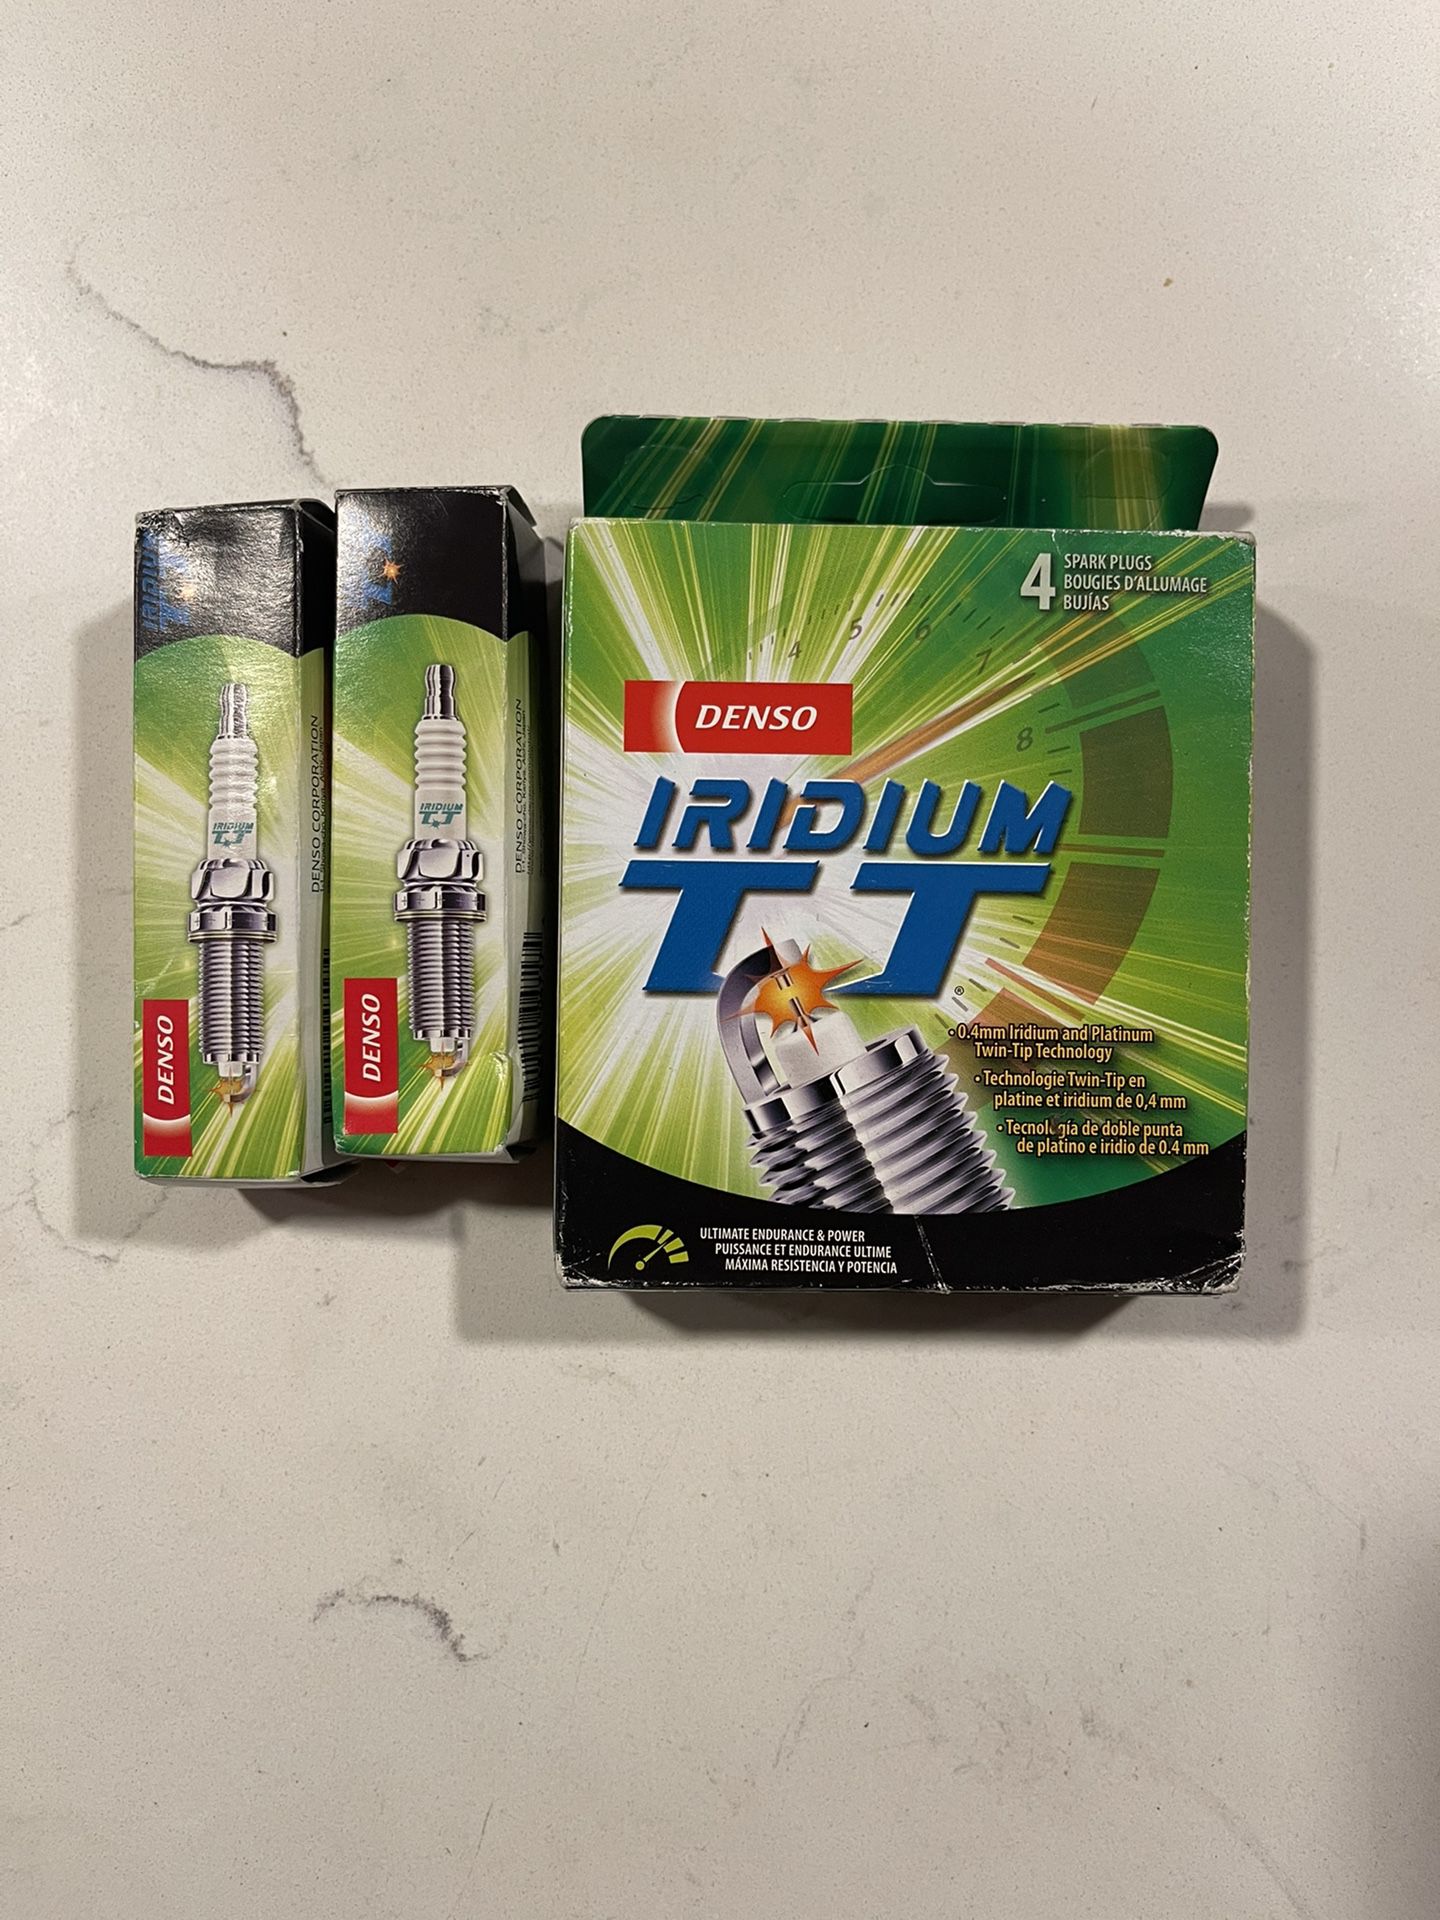 Denso Iridium TT spark plugs